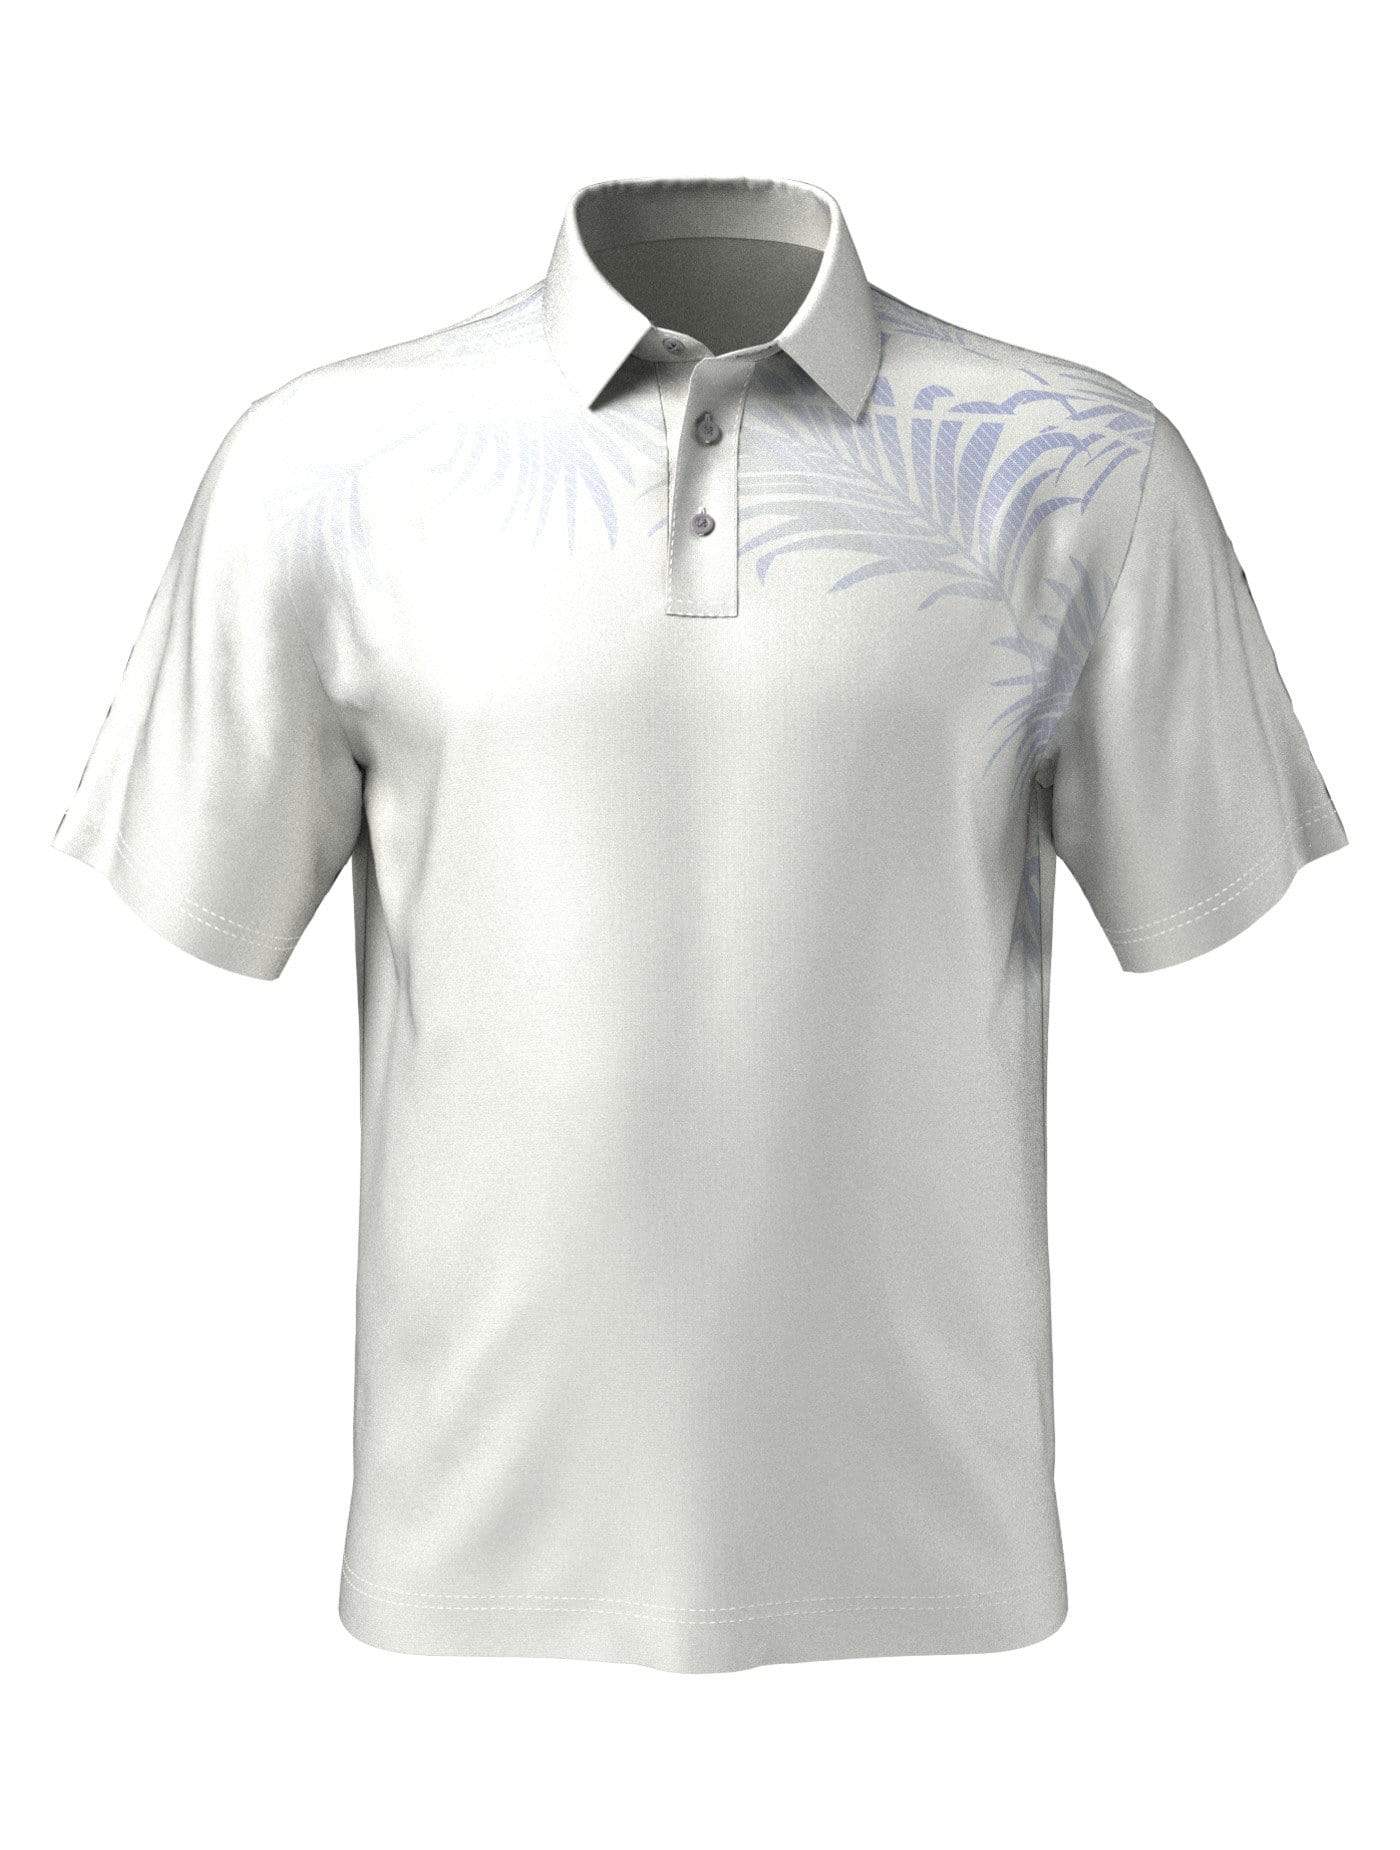 PGA TOUR Apparel Boys Asymmetrical Tropical Print Polo Shirt, Size Small, White, 100% Polyester | Golf Apparel Shop